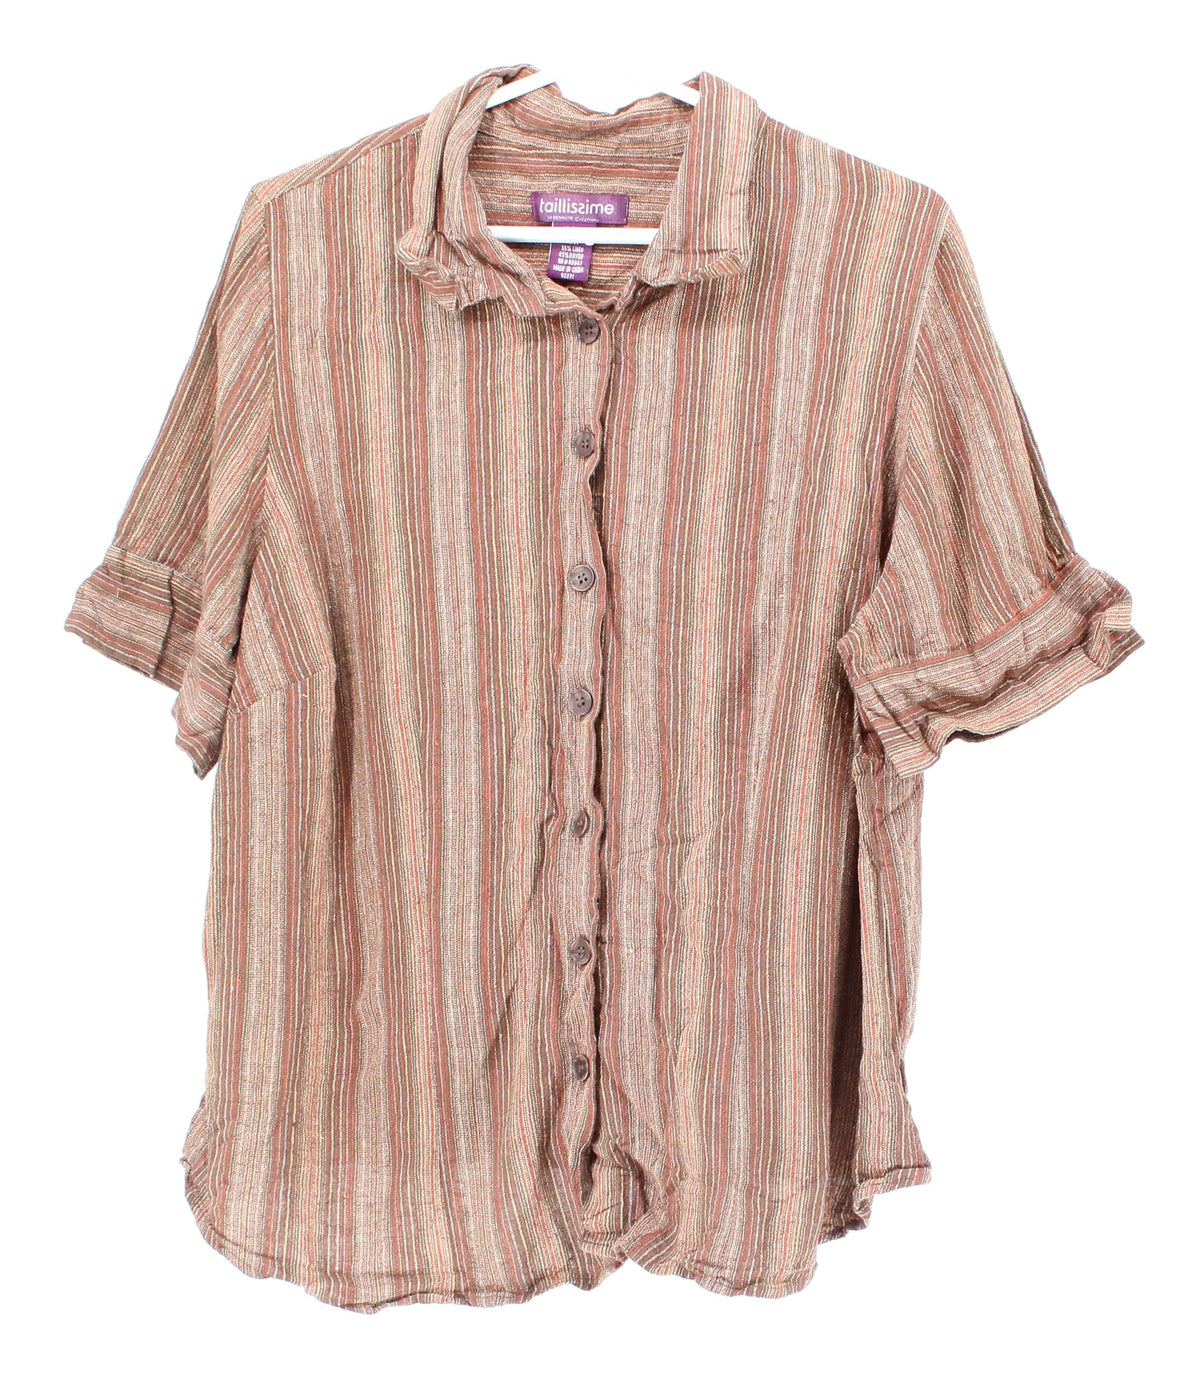 Tailissme Brown Striped Short Sleeves Shirt